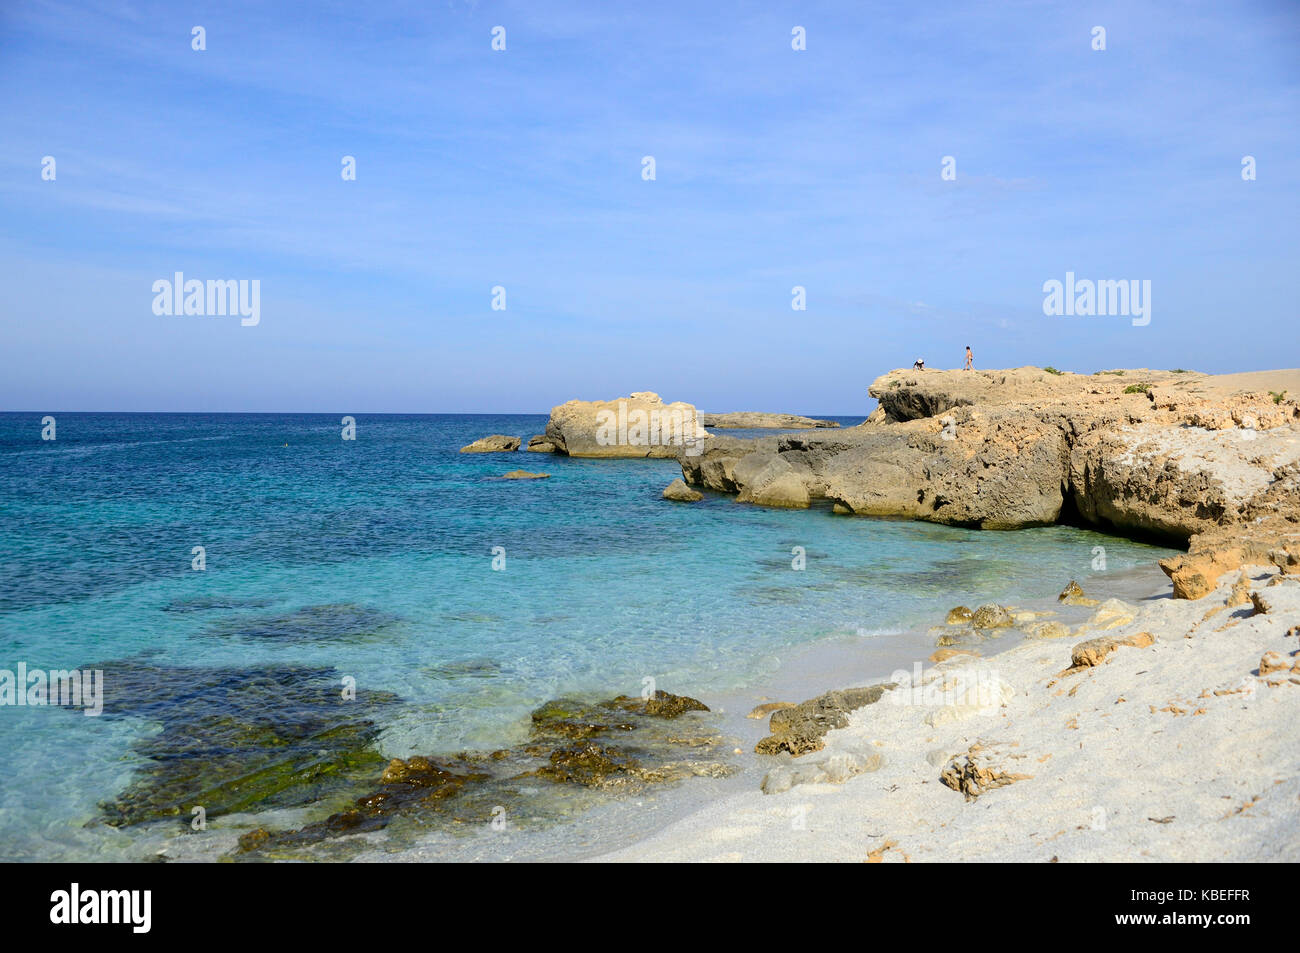 A Beautiful View On The Beach Of Is Arutas Sardinia Italy Stock Photo Alamy